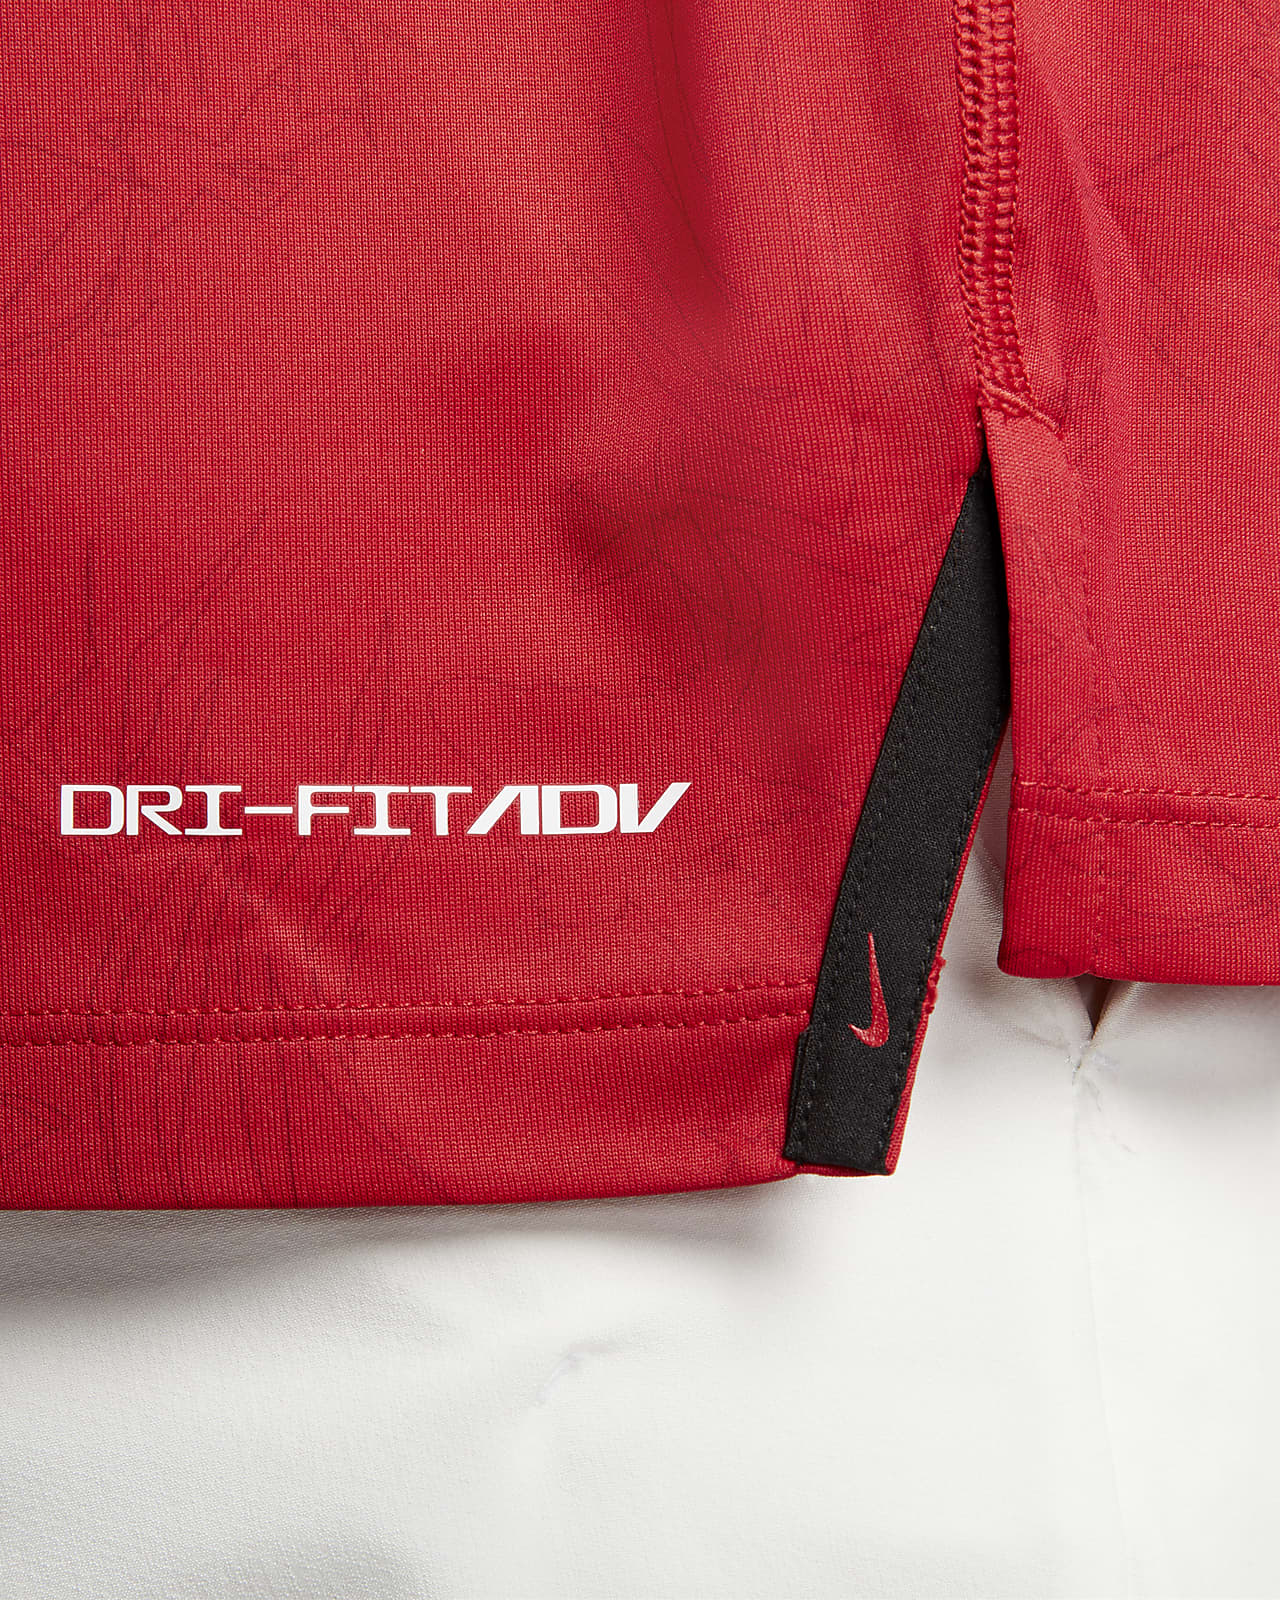 Nike Dri-FIT Yoga Layer Top Burgundy - Whirlwind Sports